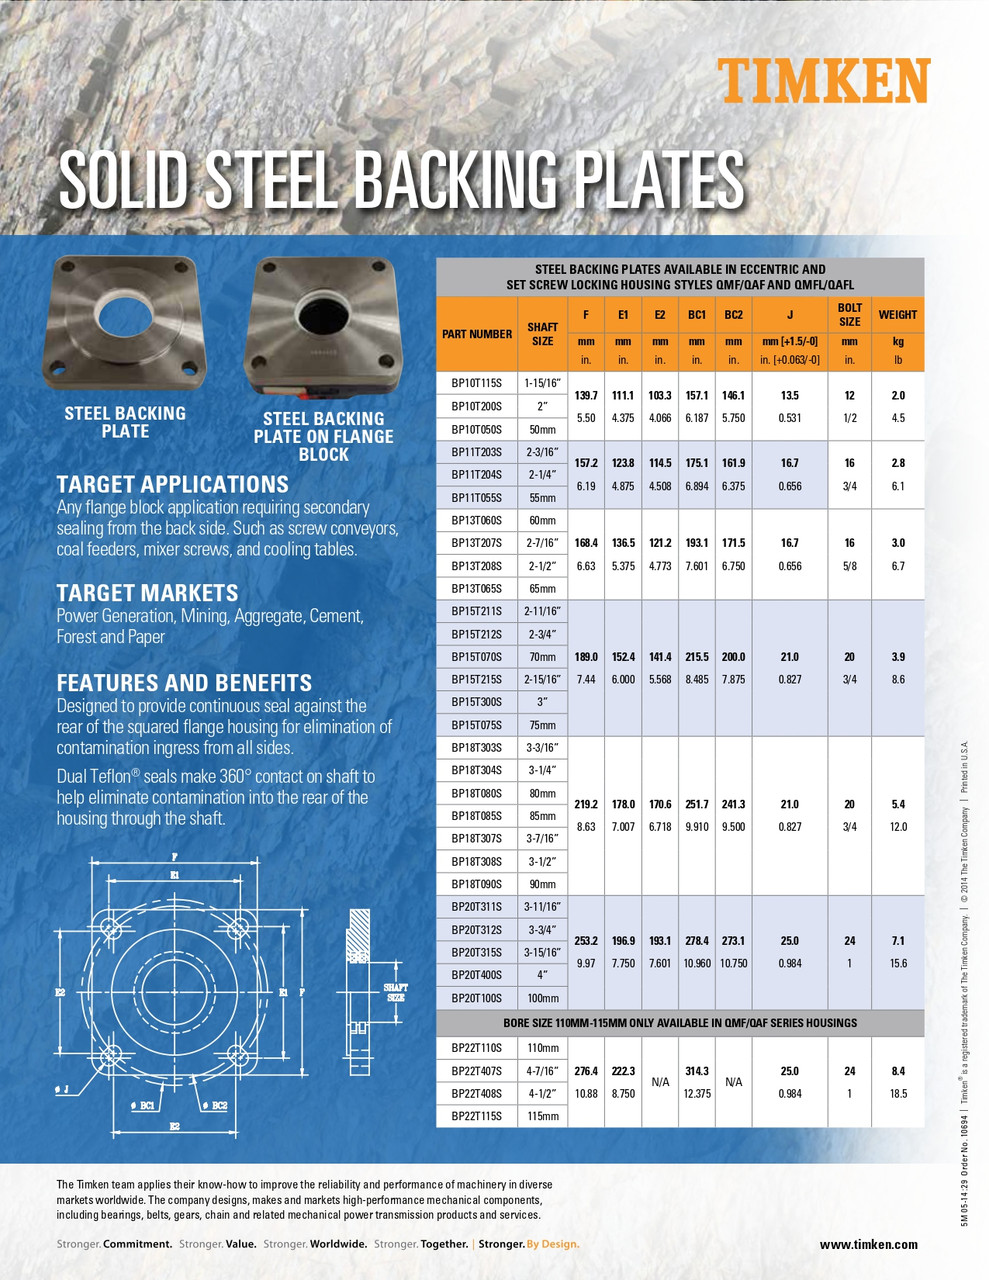 4" Timken SRB Square Flange Backing Plate w/Dual Teflon Seals  BP20T400S